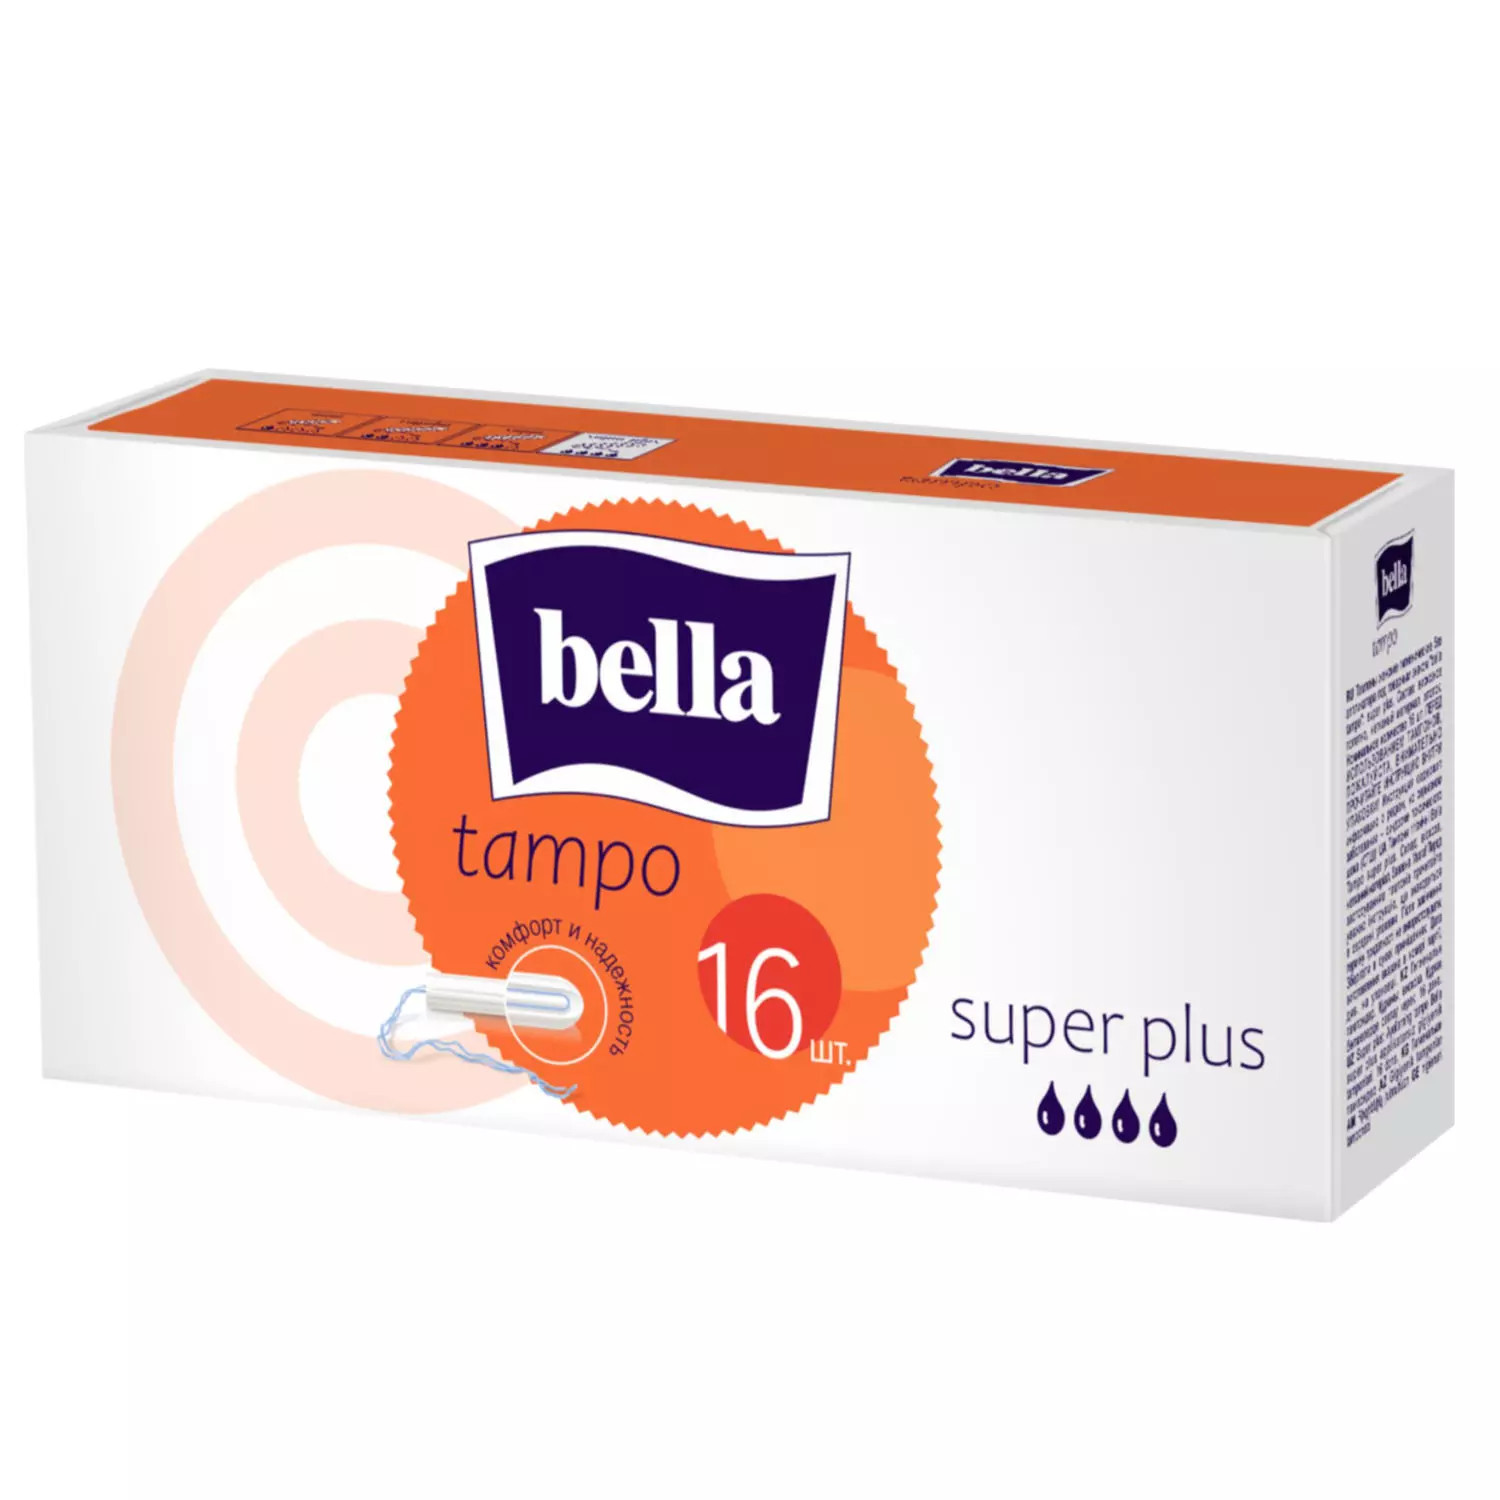 Тампоны Bella, premium comfort Super Plus без аппликатора, 16 шт тампоны bella tampo super plus premium comfort 2 уп х 16 шт